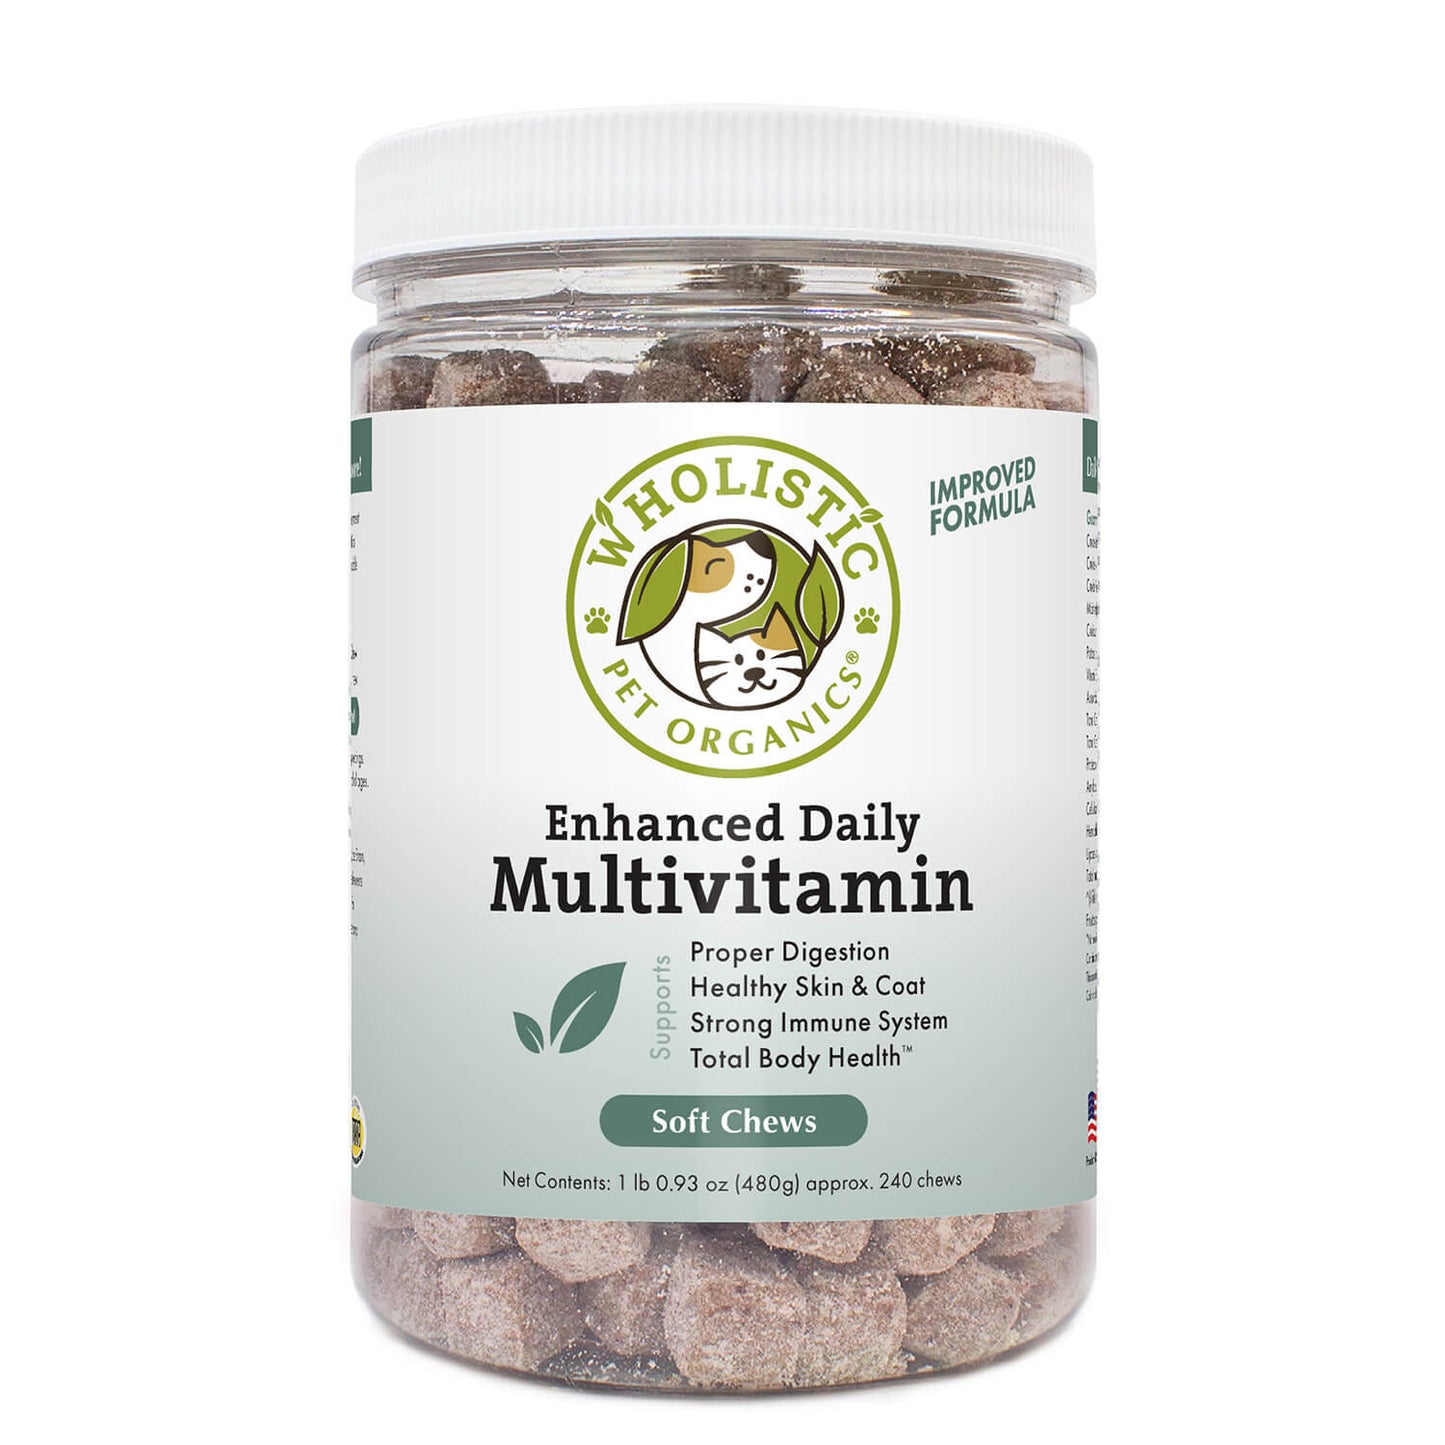 Daily Multivitamin Soft Chews